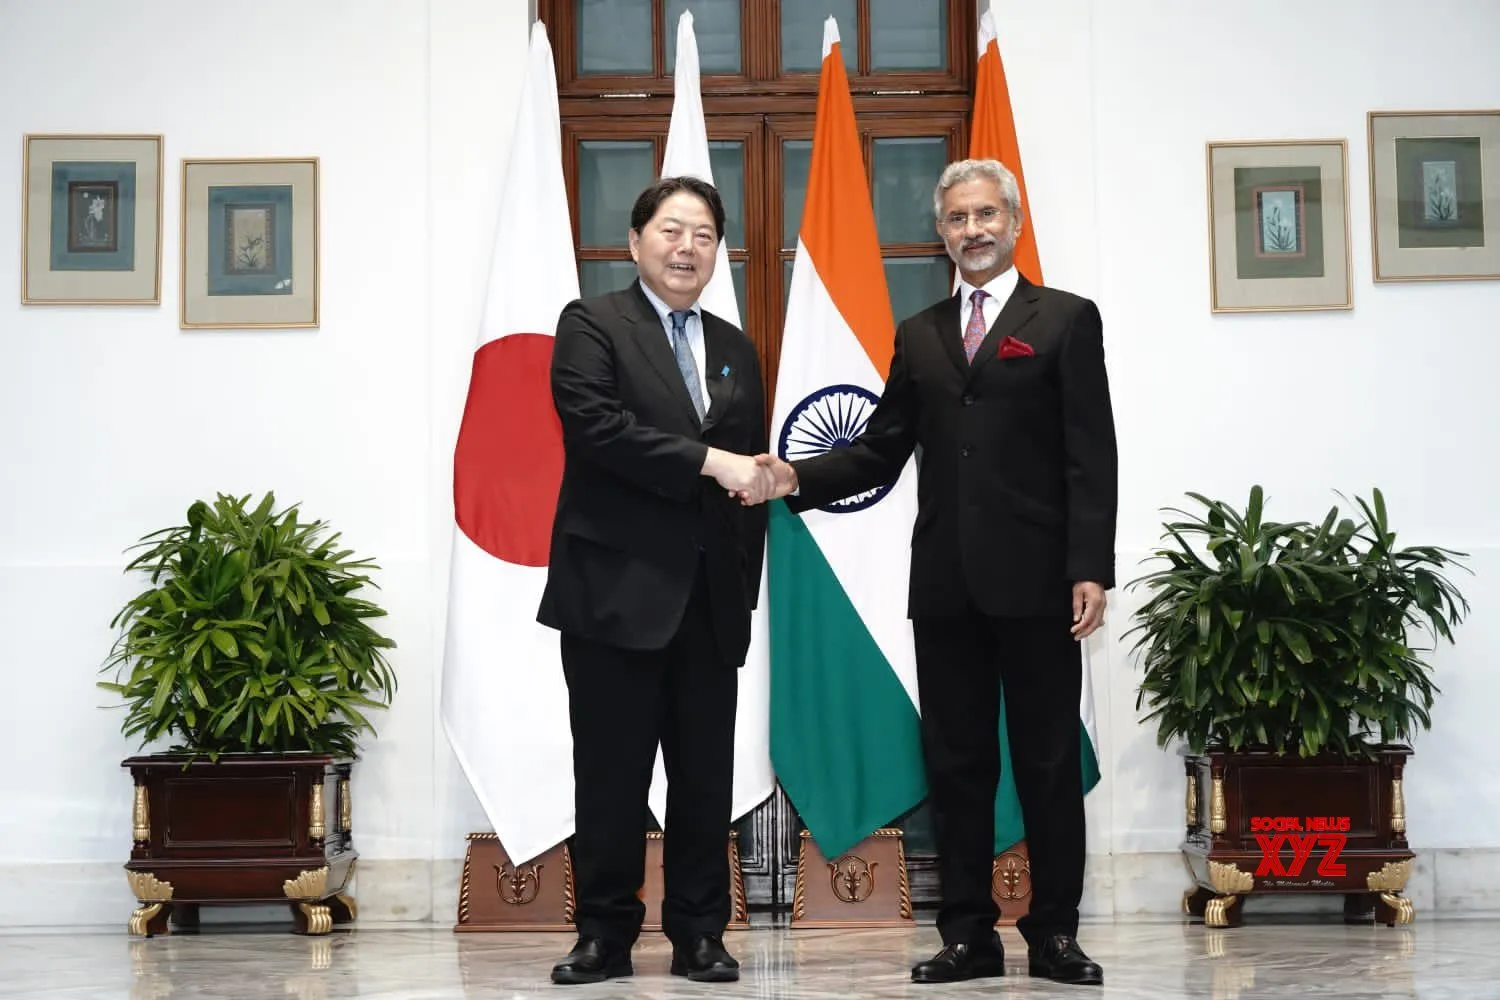 Japan is natural partner in India’s modernisation process